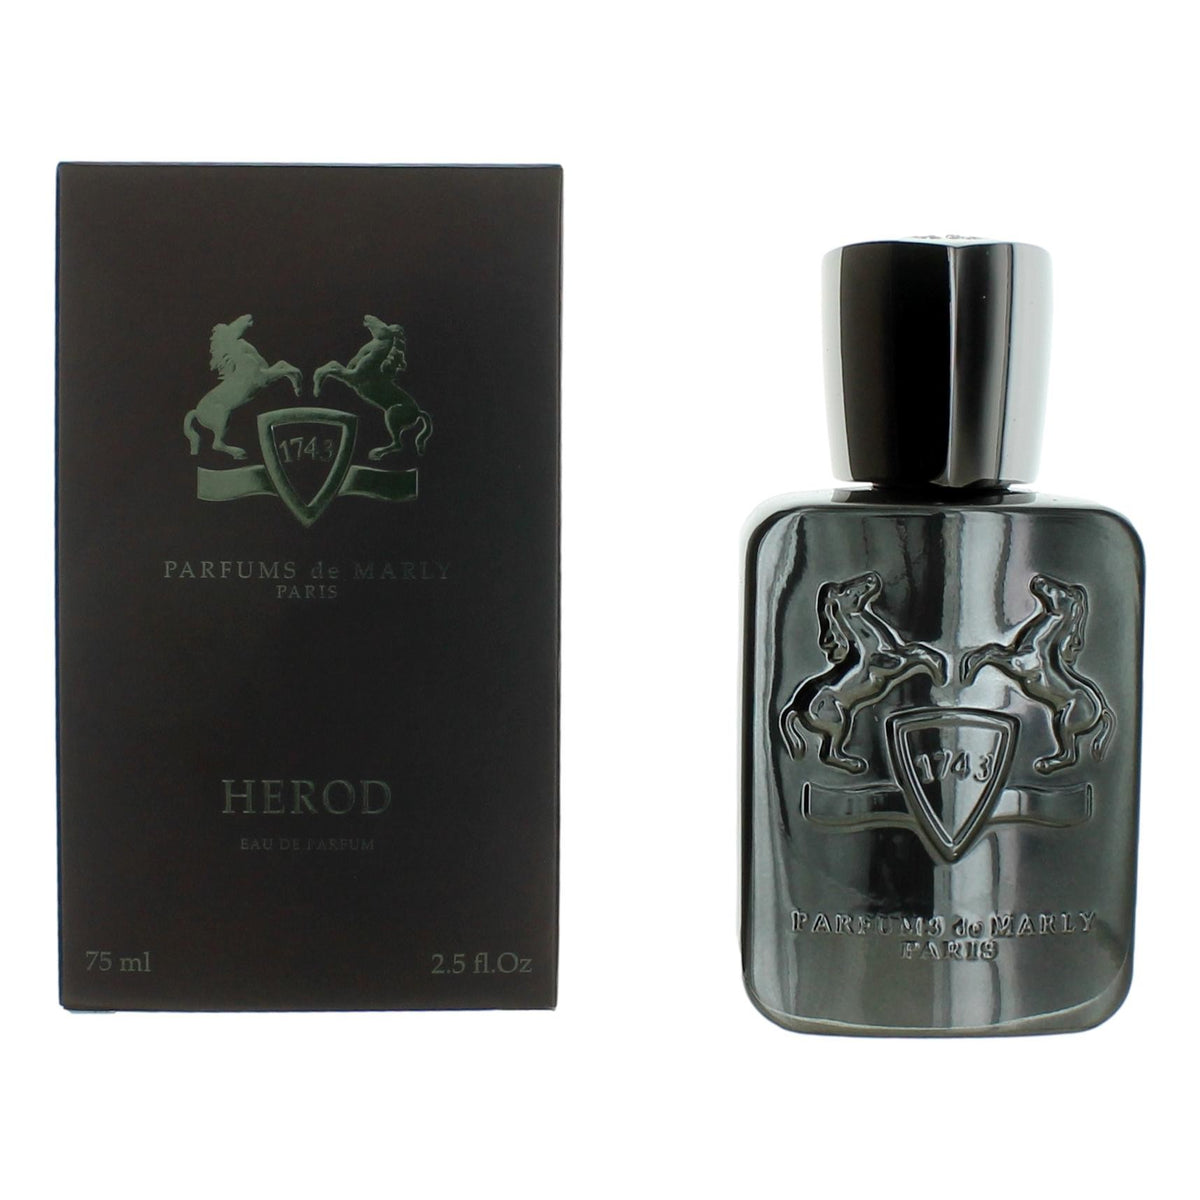 Parfums de Marly Herod by Parfums de Marly, 2.5 oz Eau De Parfum Spray for Men